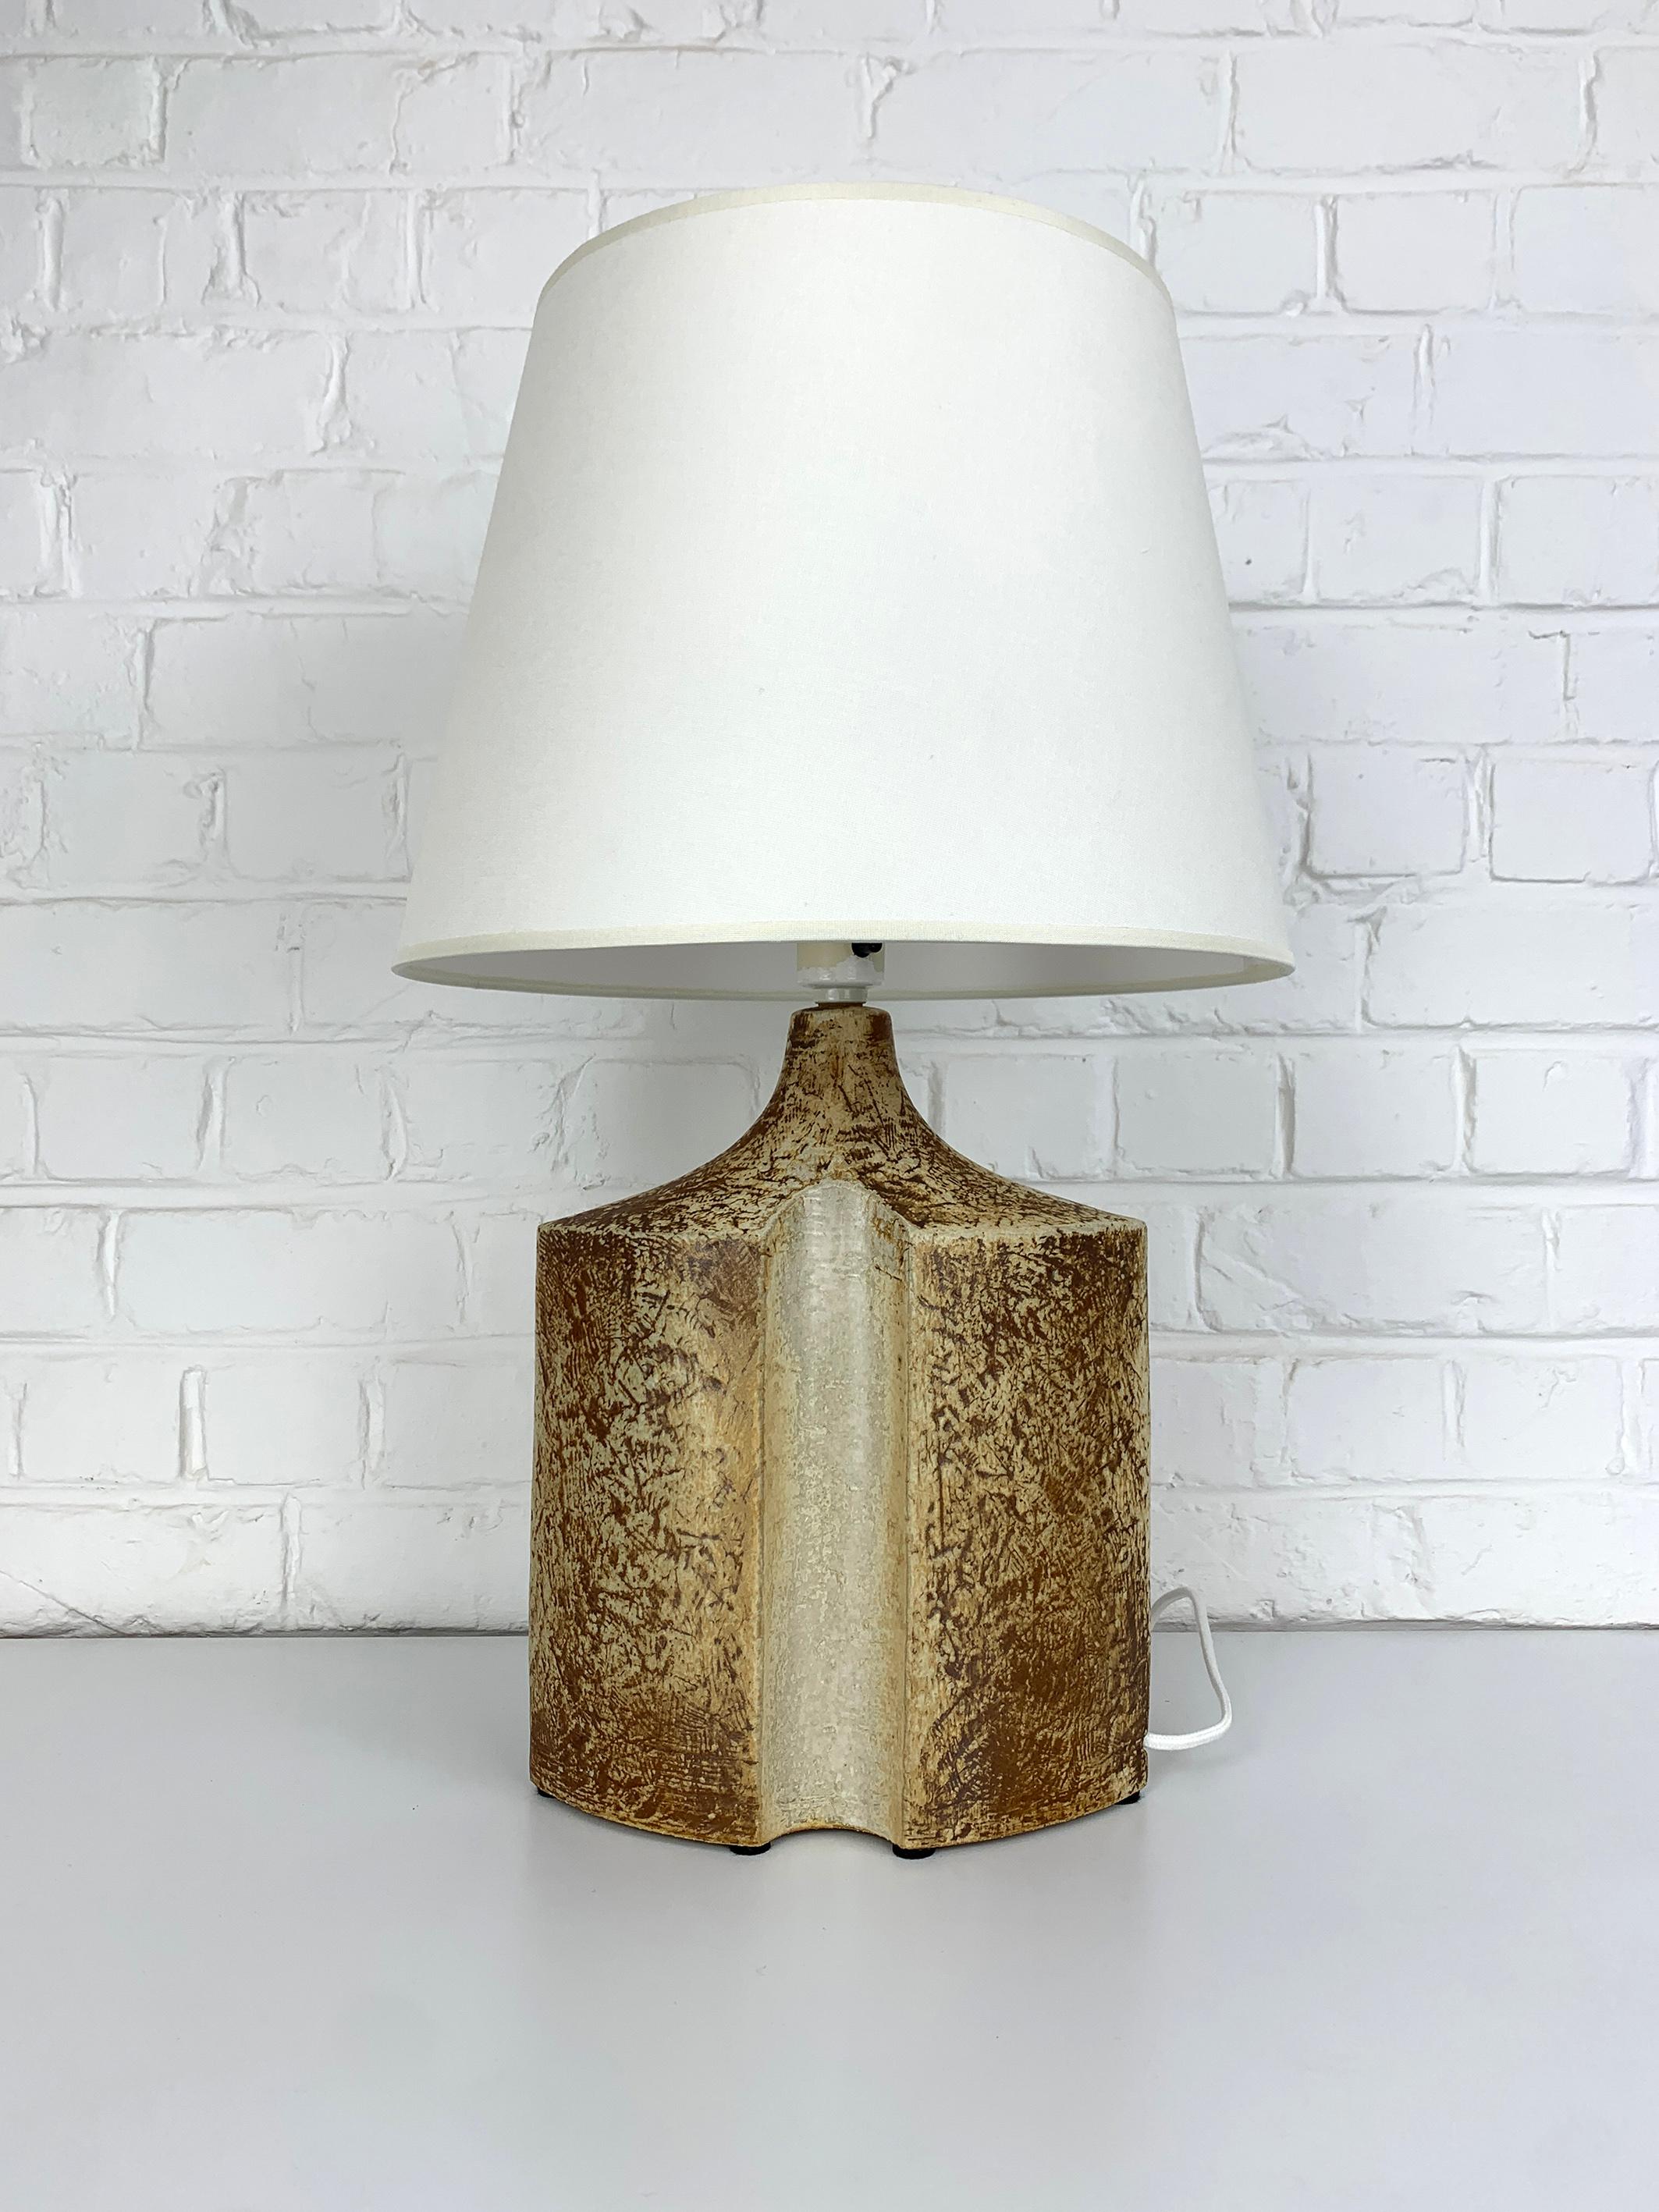 Big Danish Søholm Stentøj ceramic table lamp, glazed stoneware by Haico Nitzsche For Sale 2